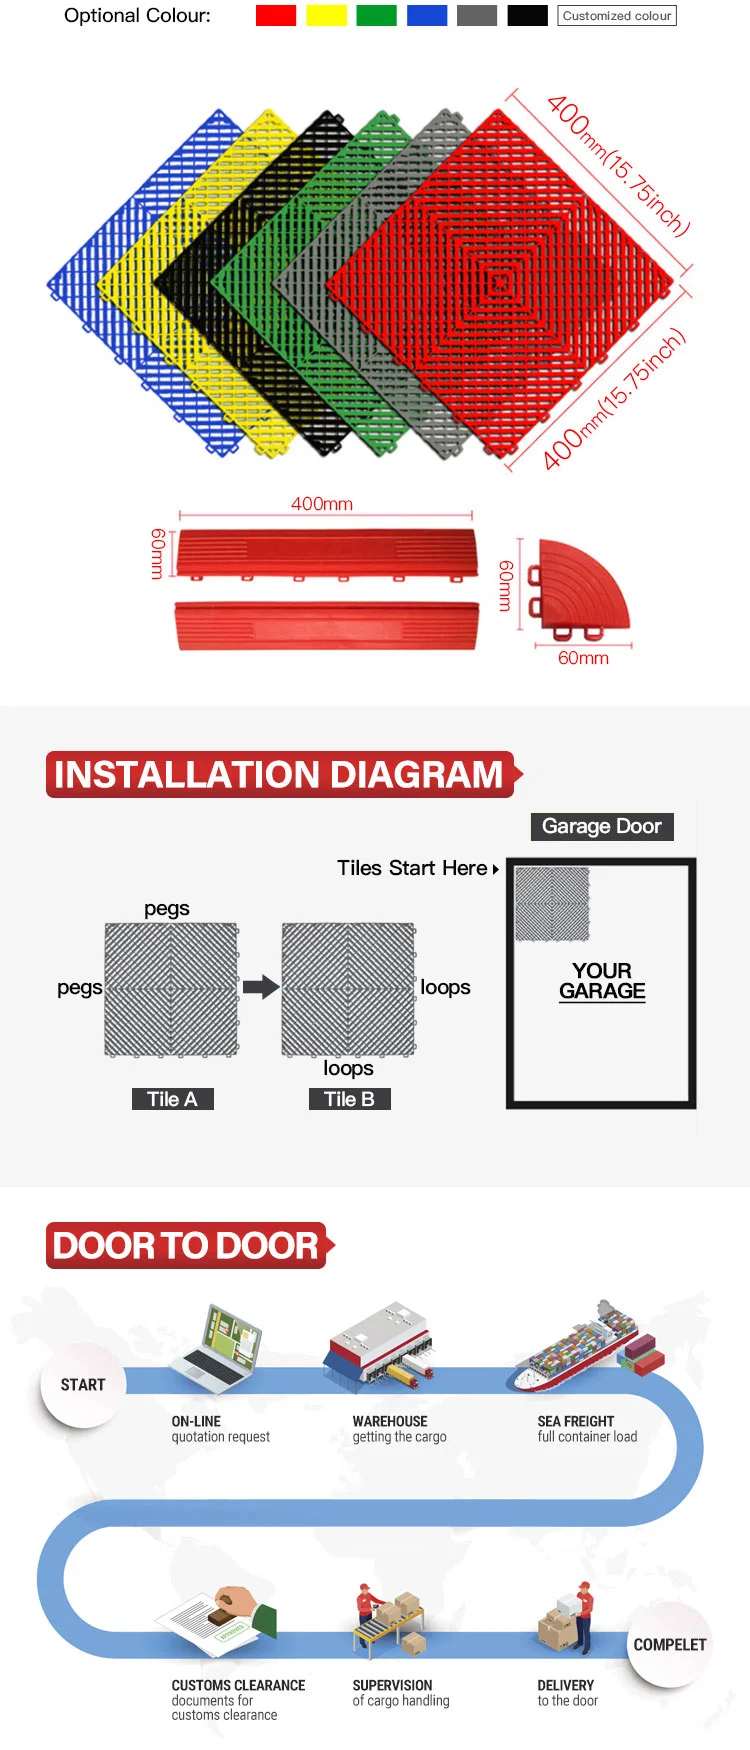 Interlocking Plastic Industrial Garage Flooring, Outdoor Interlocking Floor Tiles for Garage Floor